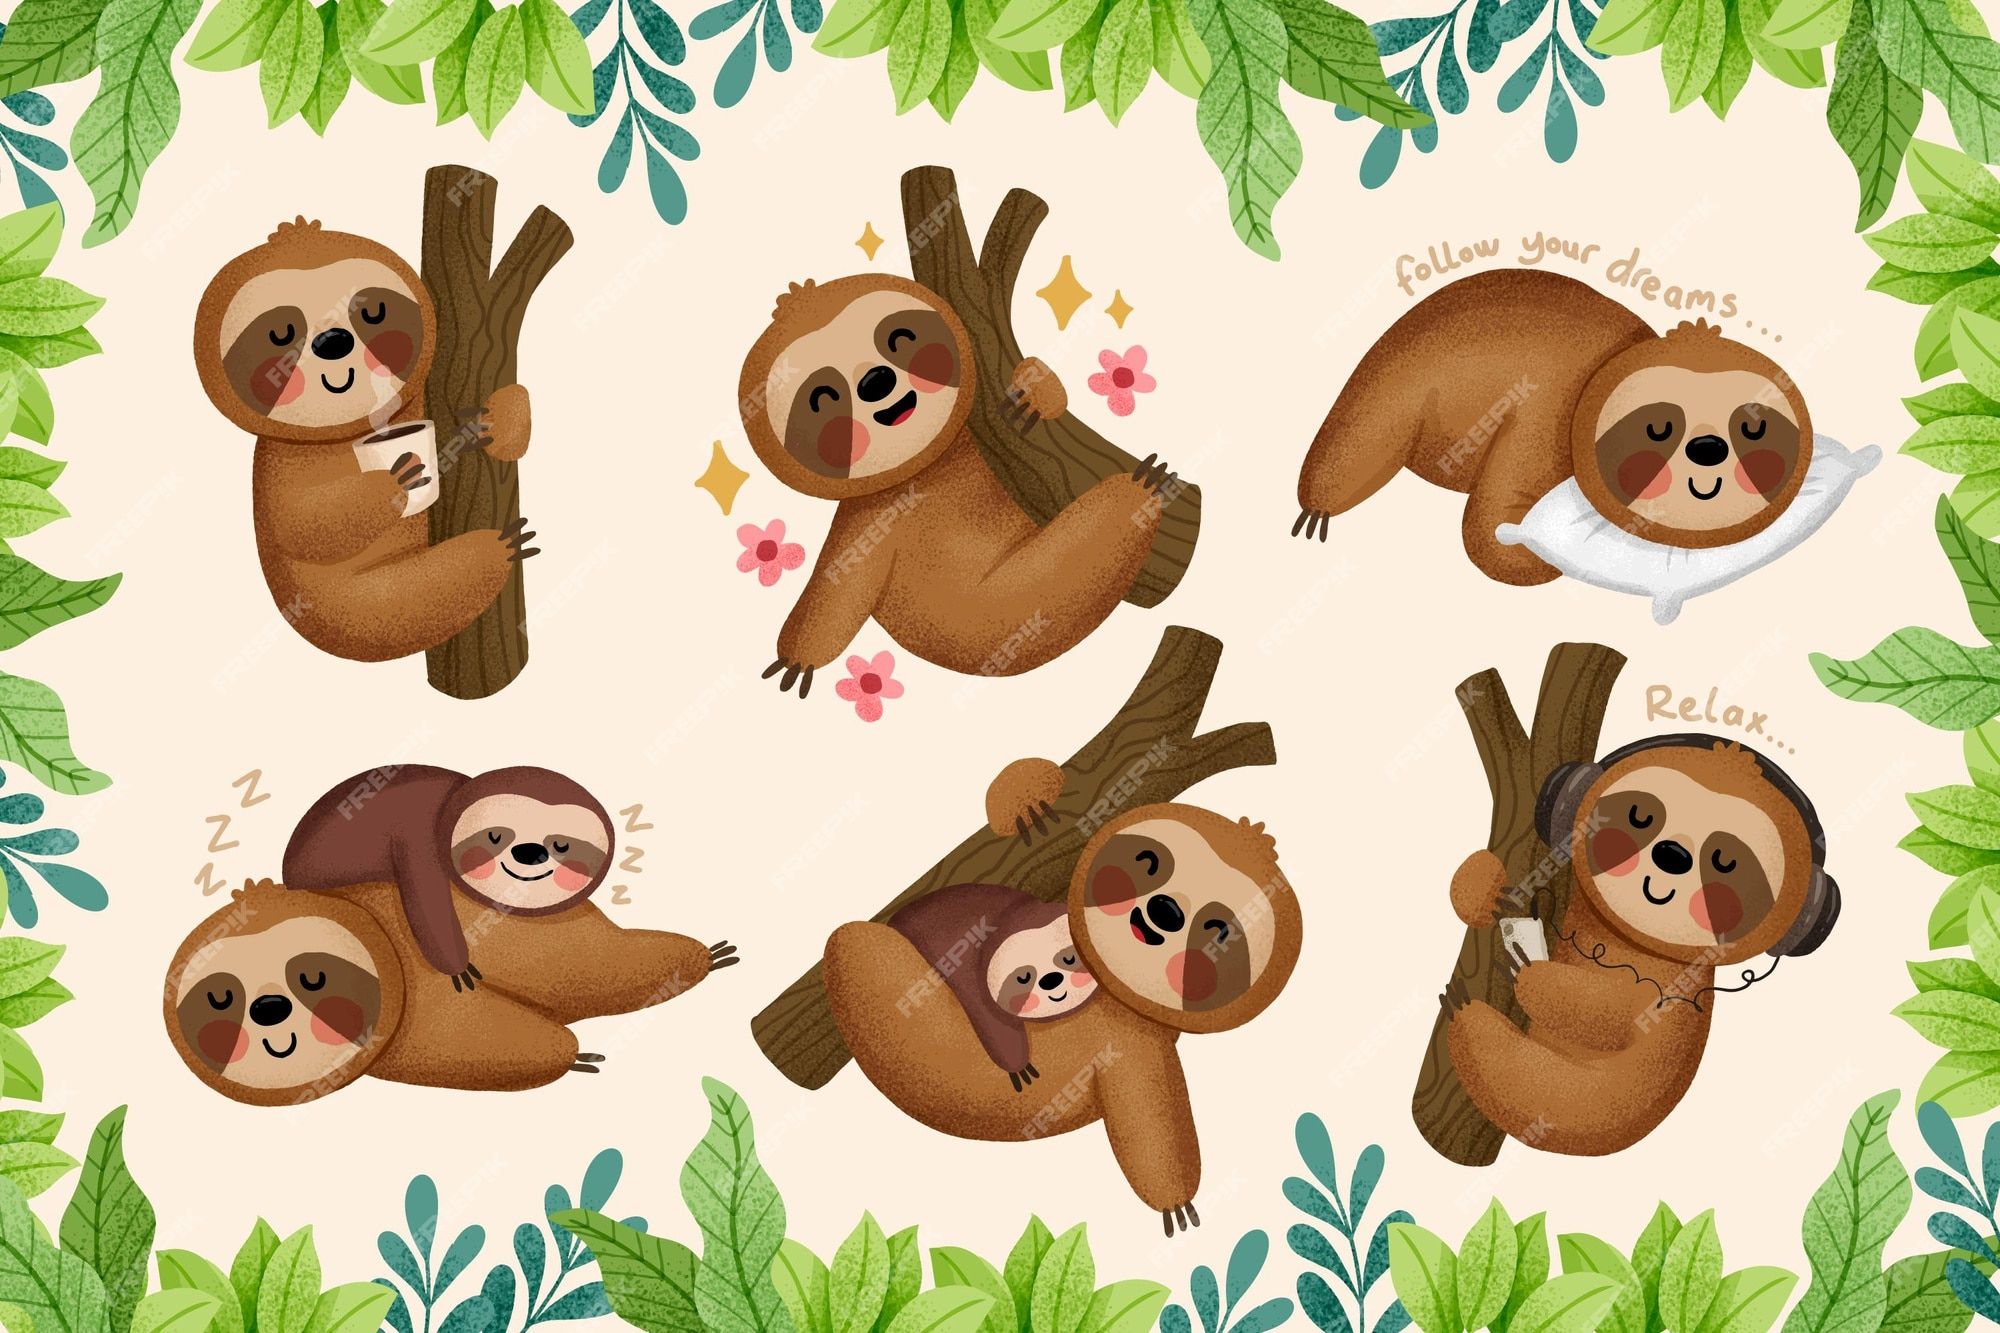 Cute Sloth Image